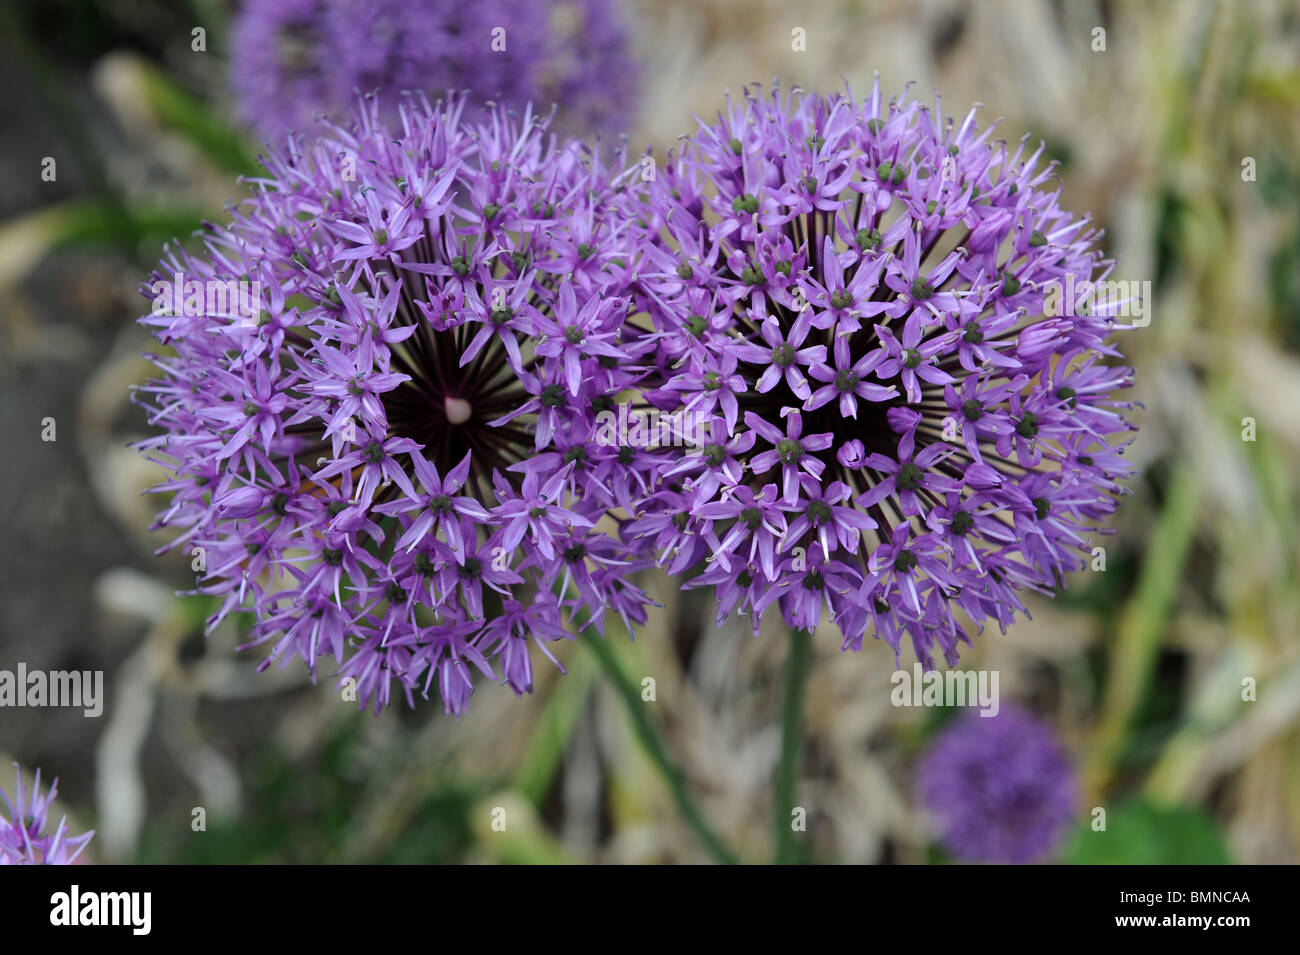 Allium Hollandicum Purple Sensation Ornamental onion in flower Stock Photo